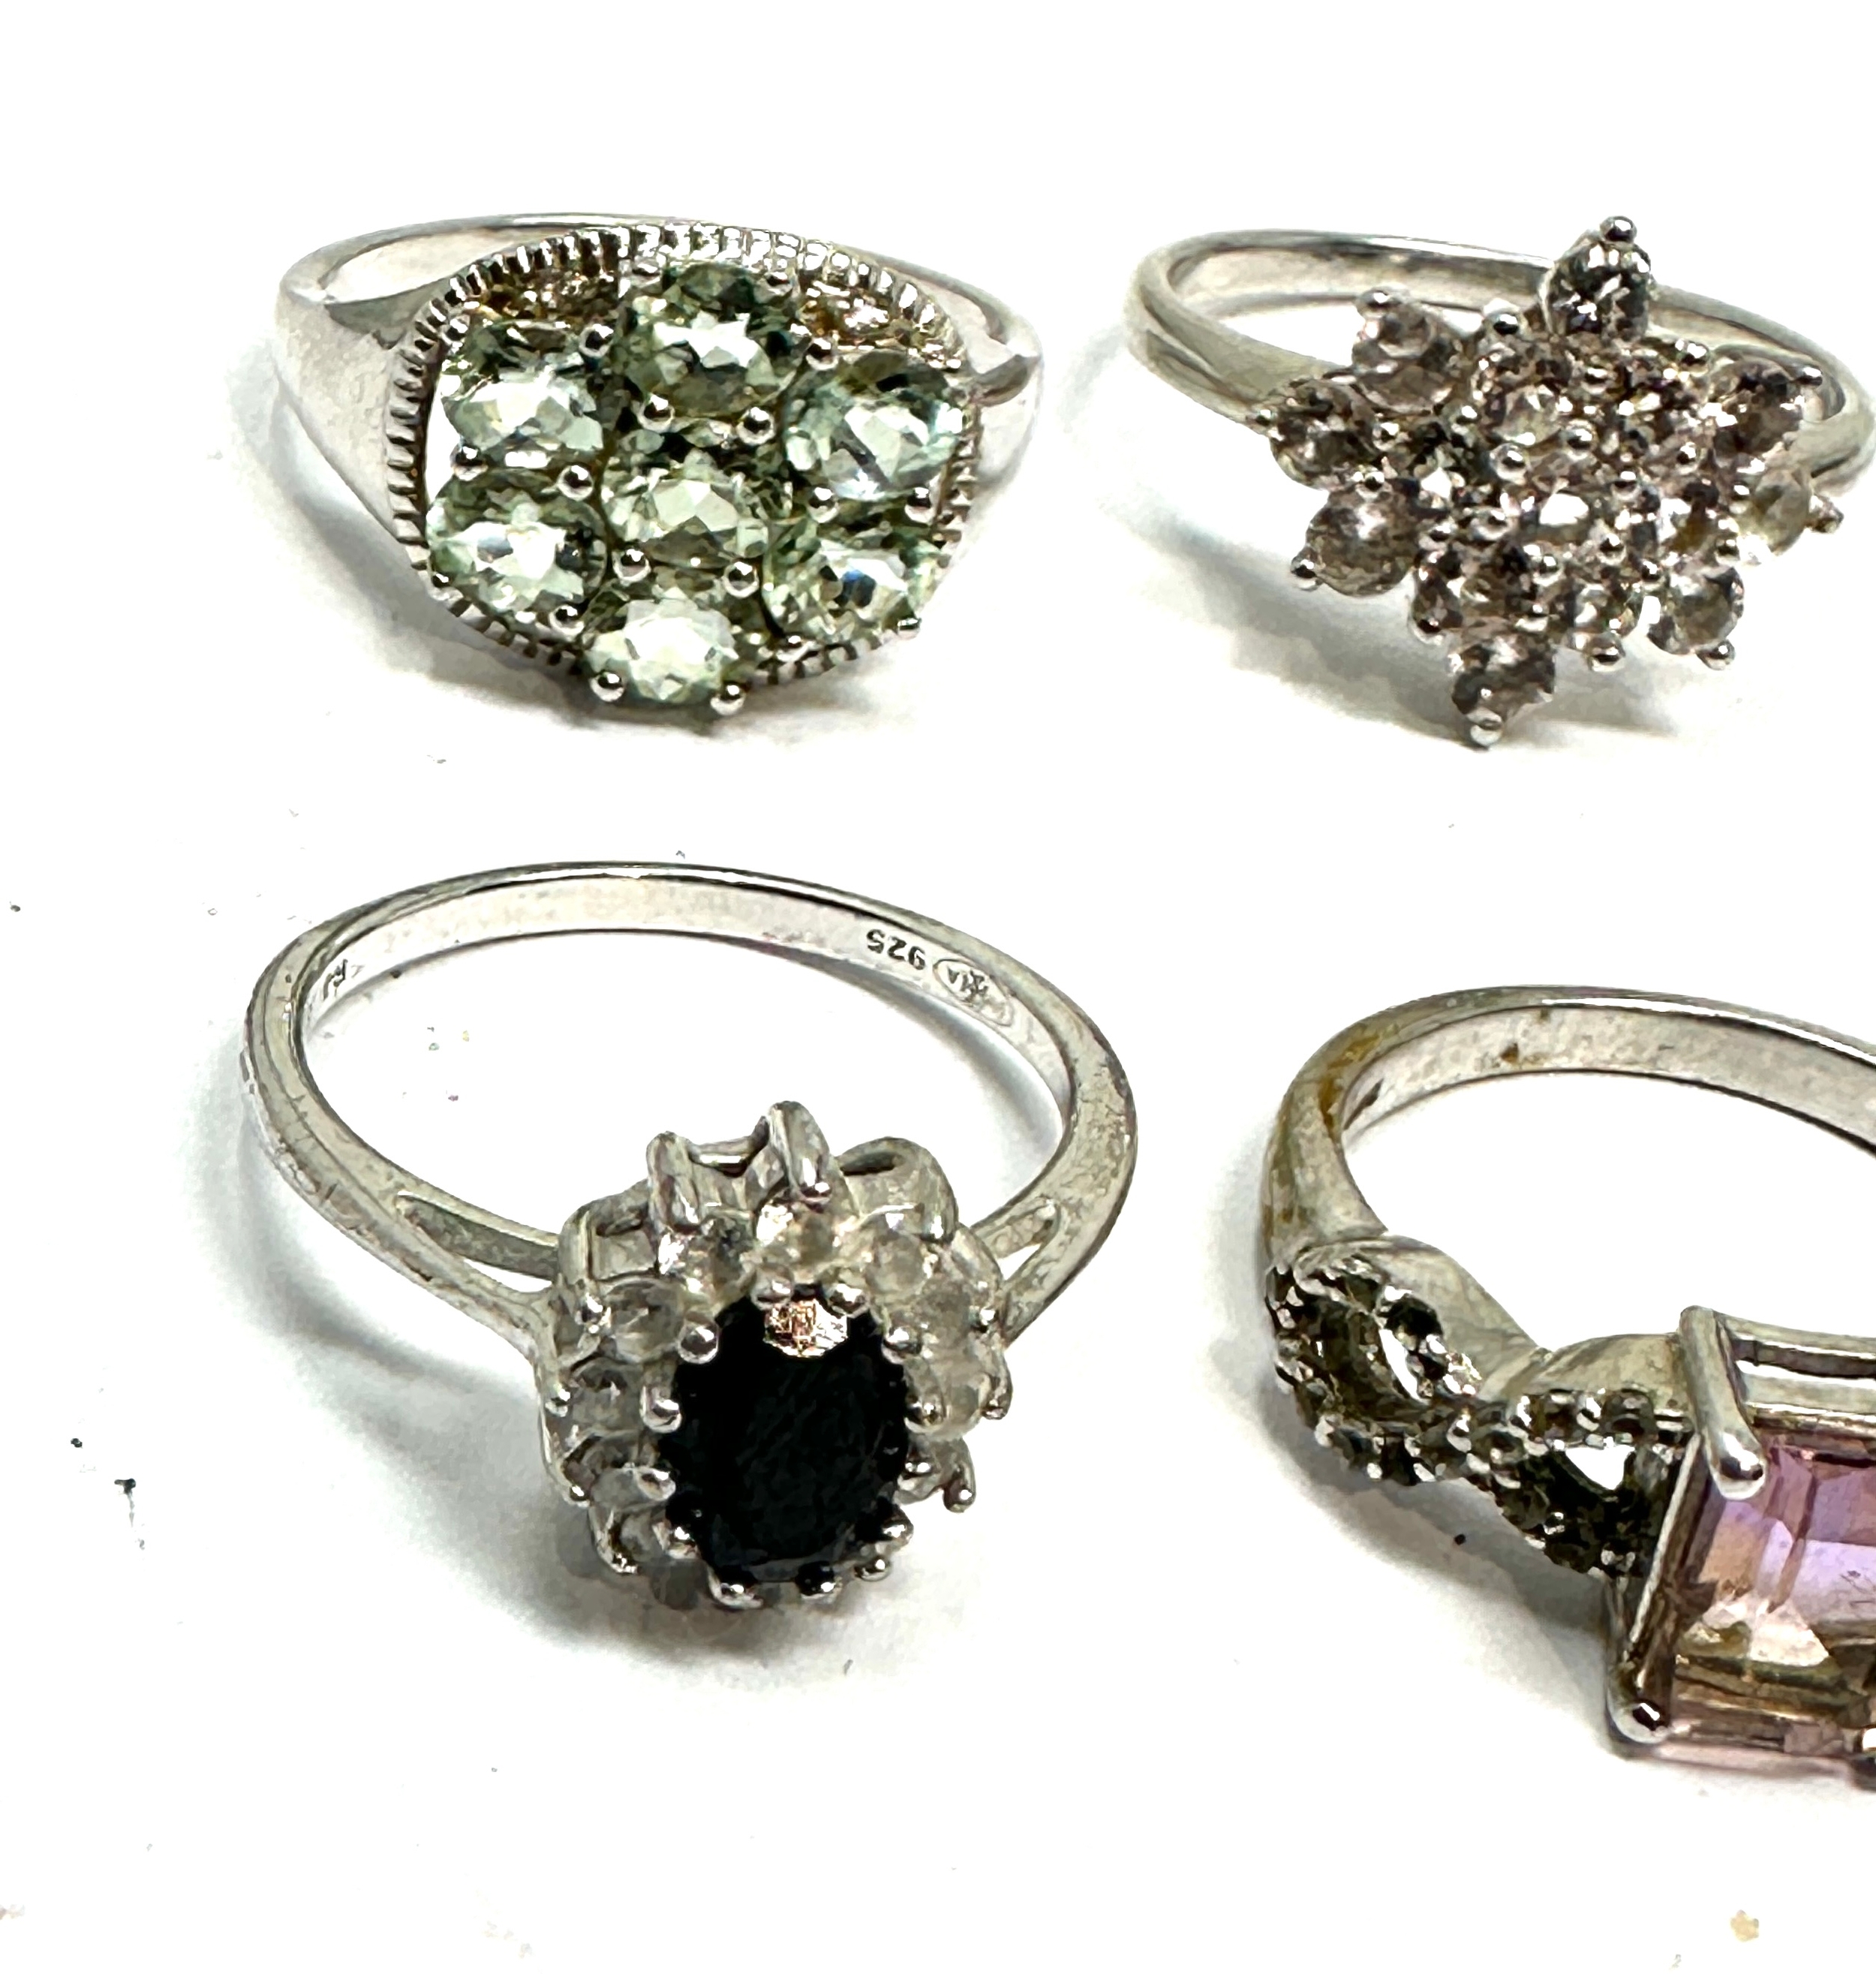 6 gemstone set silver rings weight 25g - Image 2 of 4